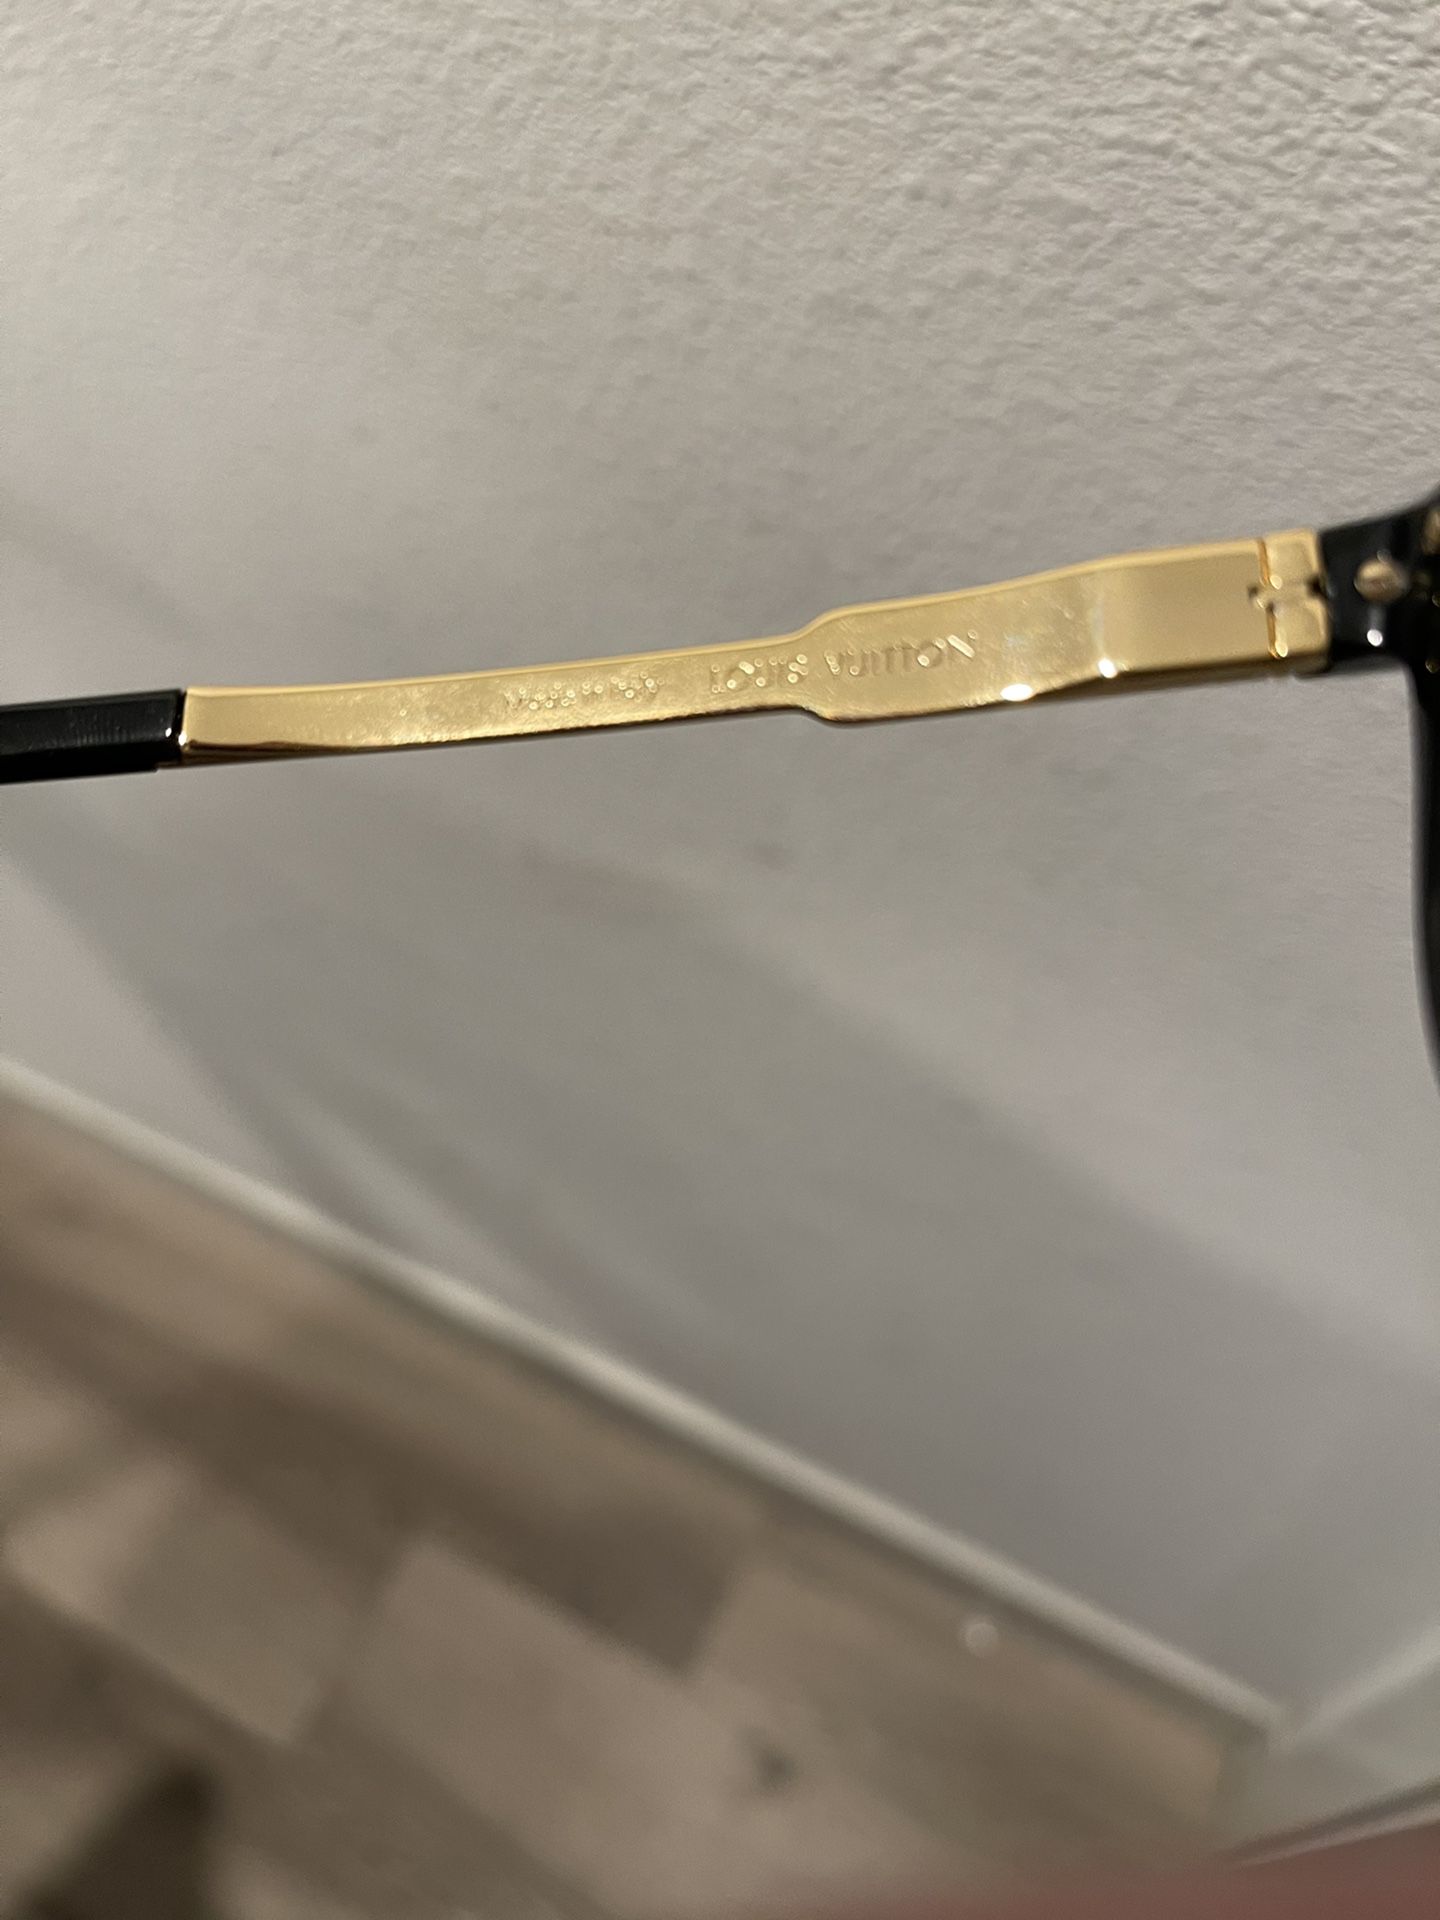 Louis Vuitton Goldtone Metal Frame The Party Sunglasses Z0926U